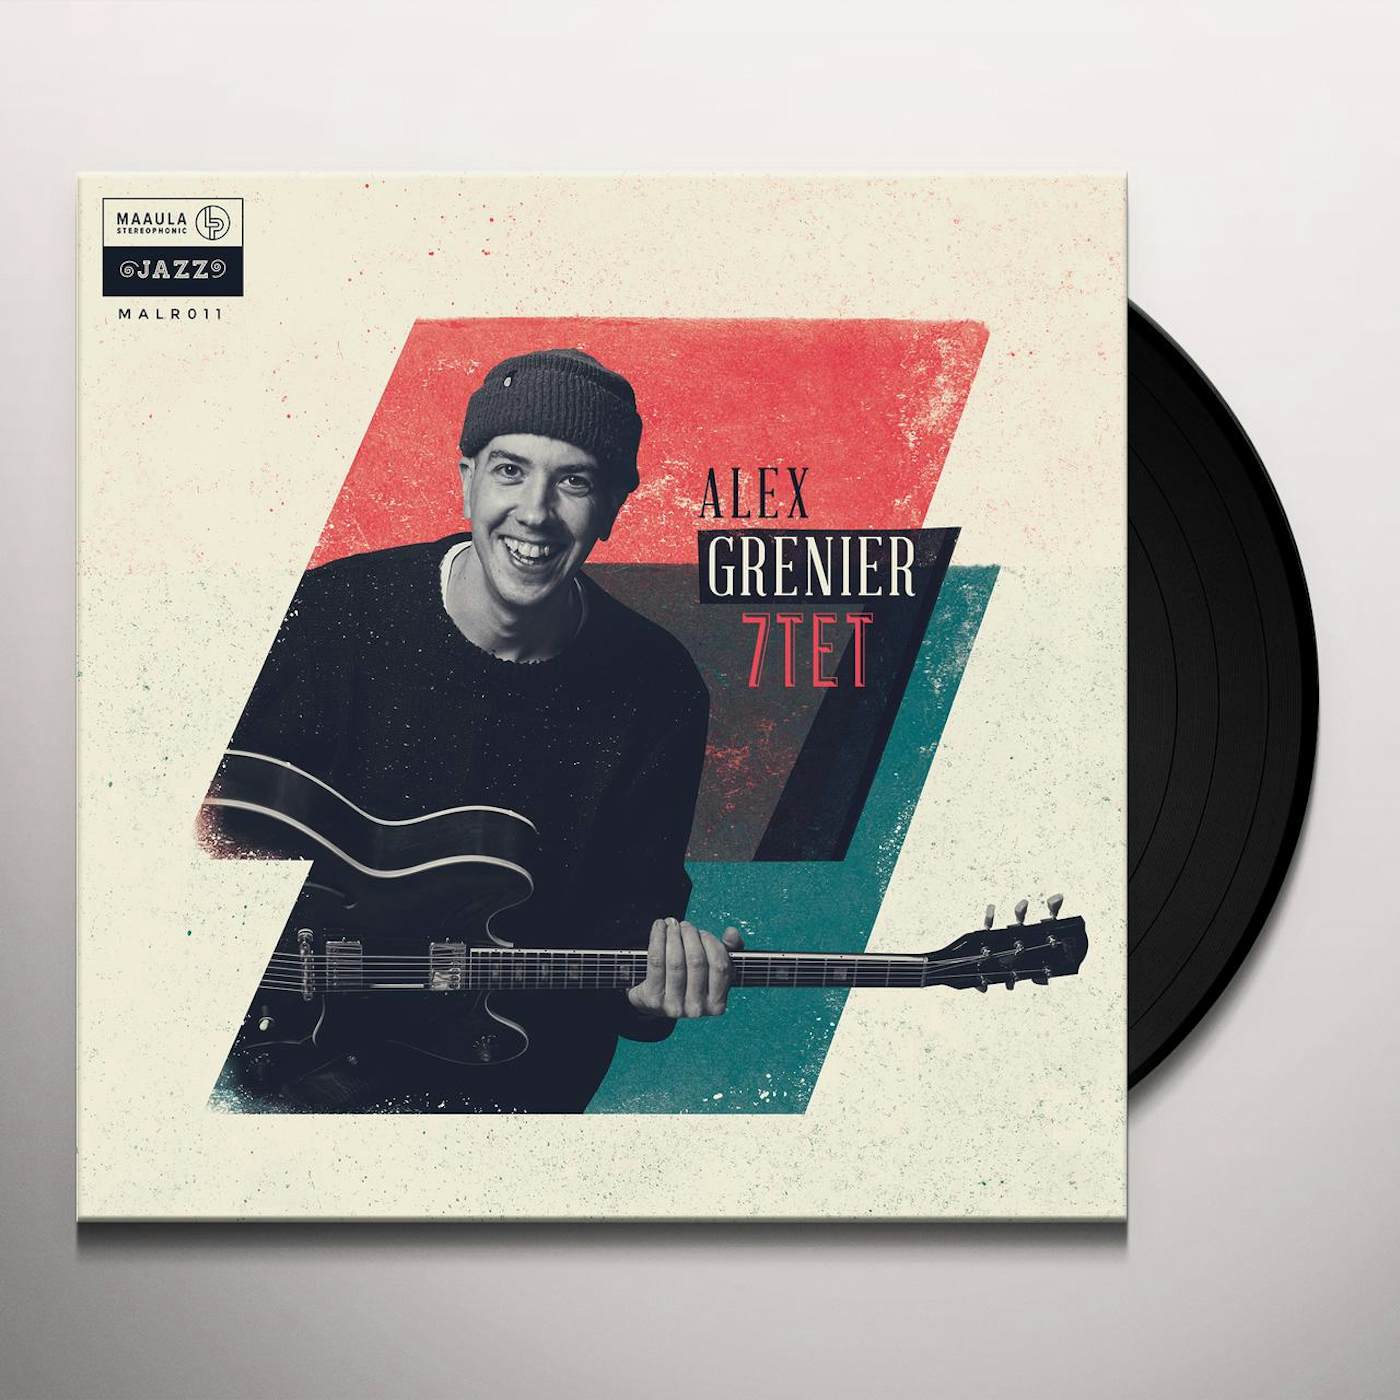 Alex Grenier 7tet Vinyl Record